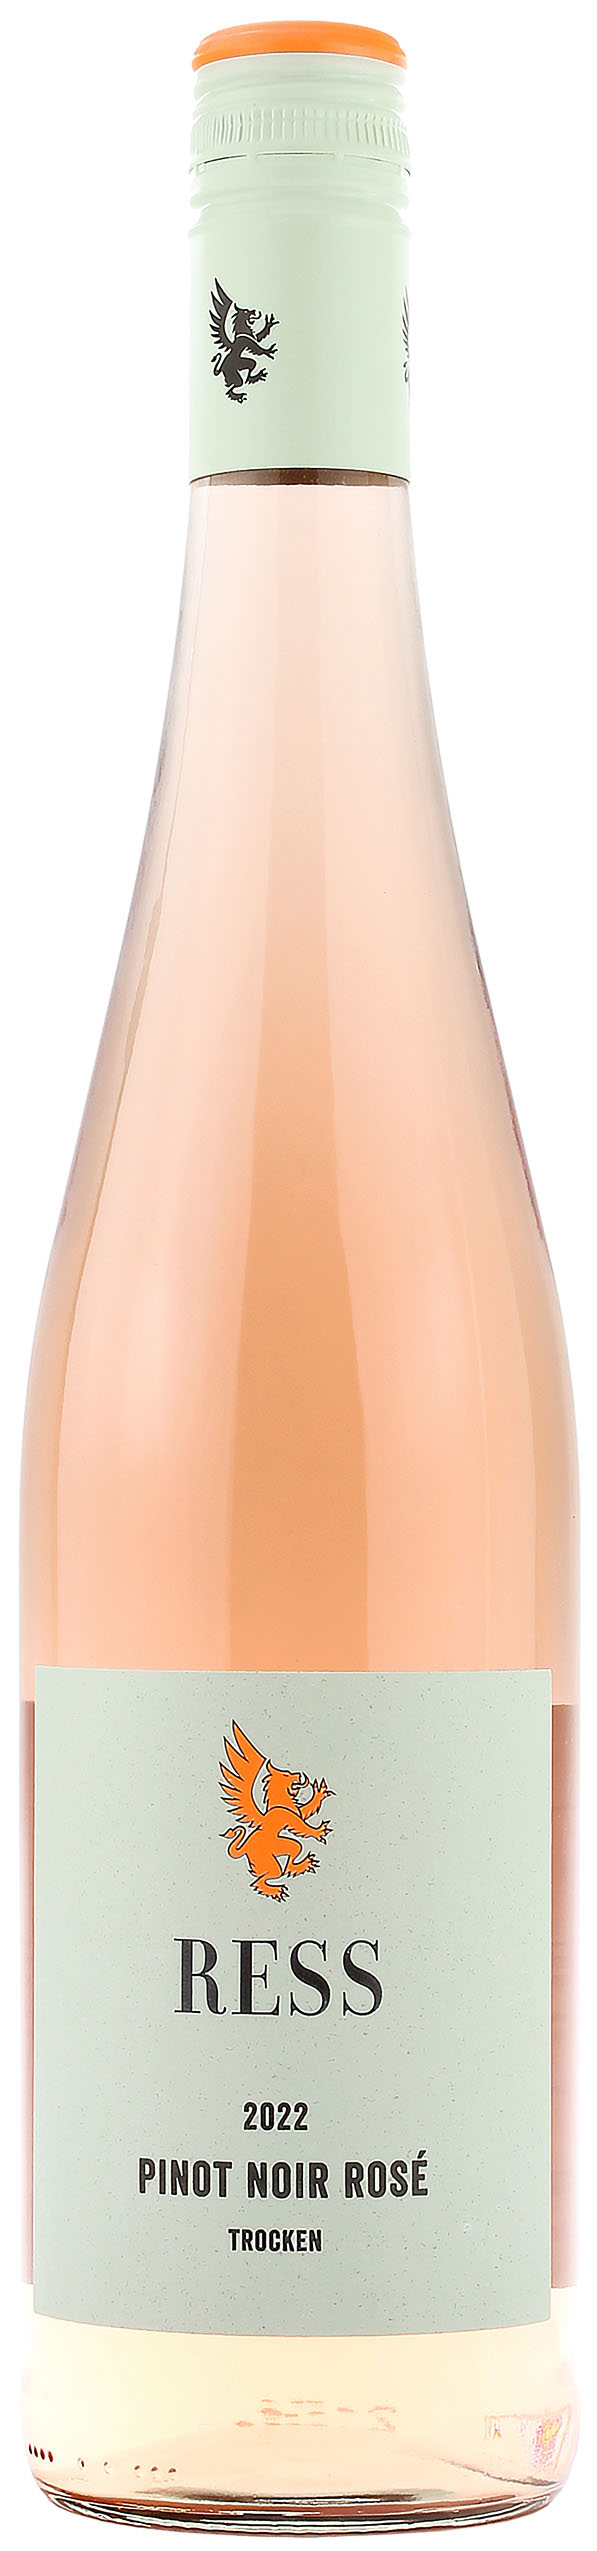 Ress Pinot Noir Rosé Bio 2022 12.5% 0,75l